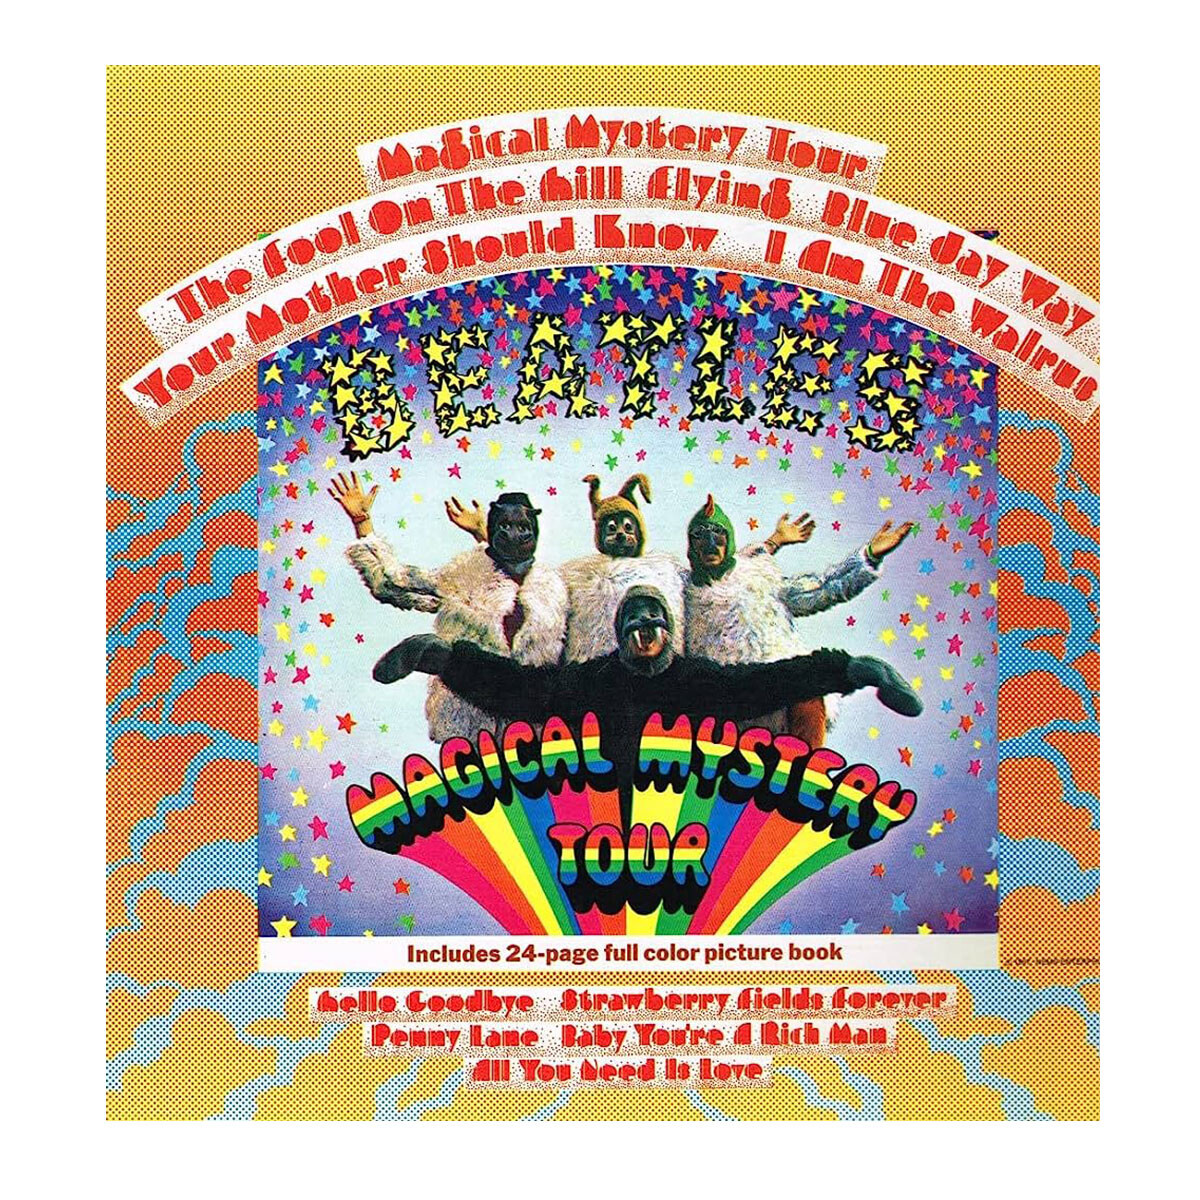 The Beatles-magical Mystery Tour - Vinilo 